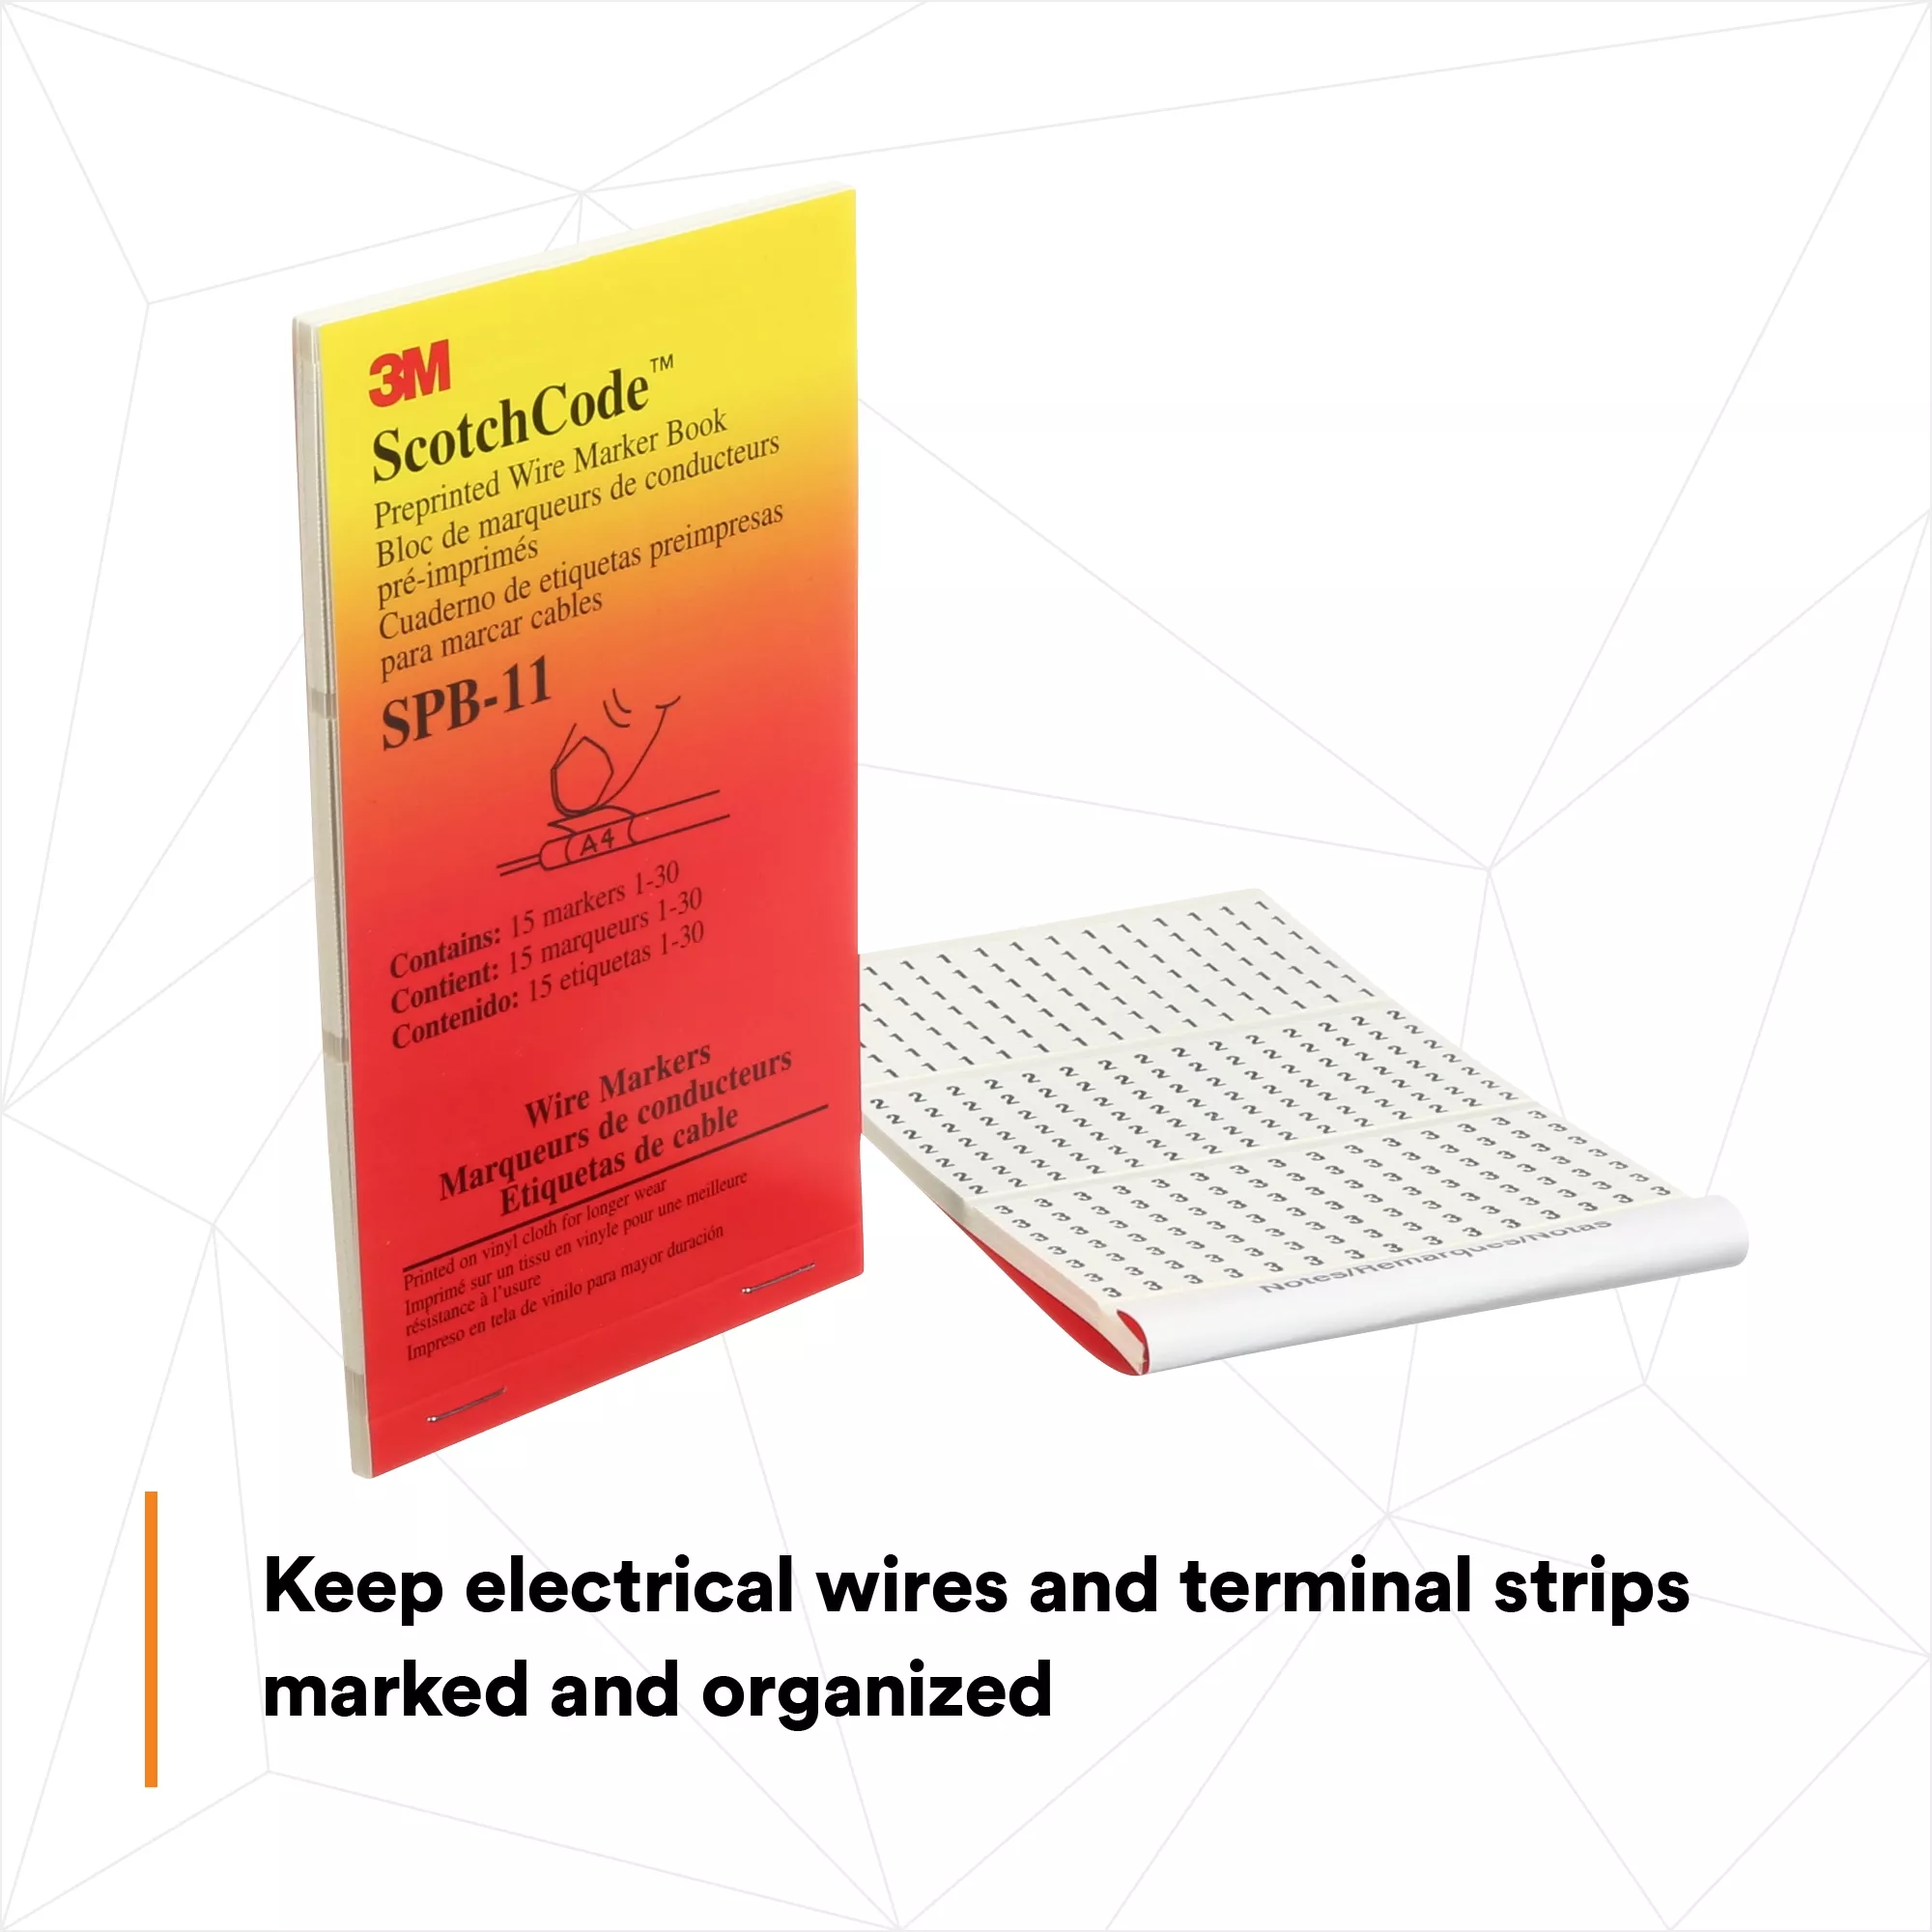 SKU 7000132484 | 3M™ ScotchCode™ Pre-Printed Wire Marker Book SPB-11